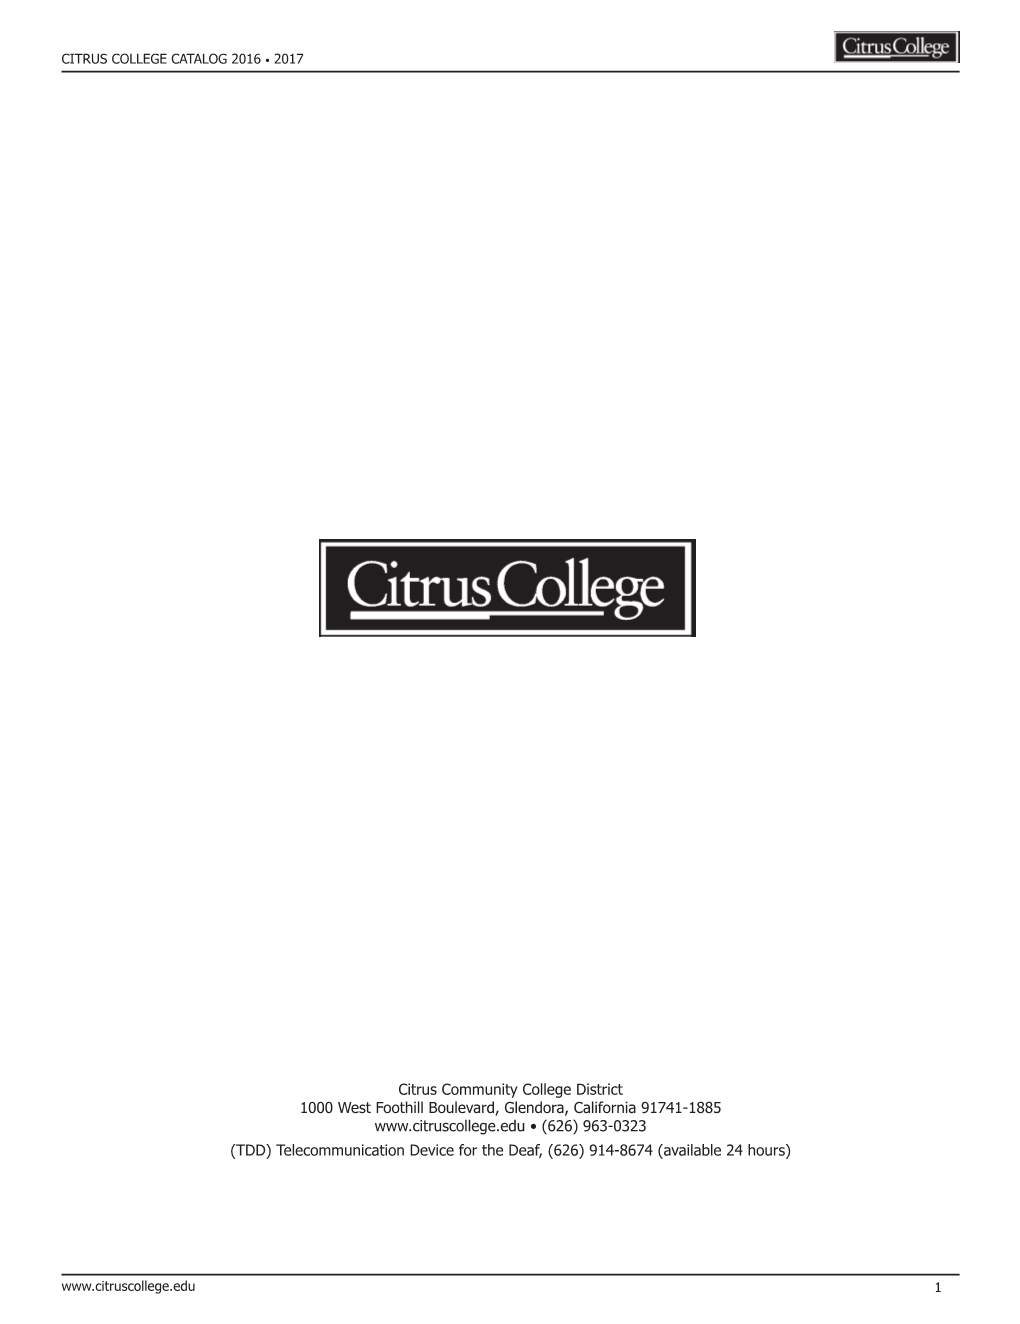 Citrus Community College District 1000 West Foothill Boulevard, Glendora, California 91741-1885 • (626)